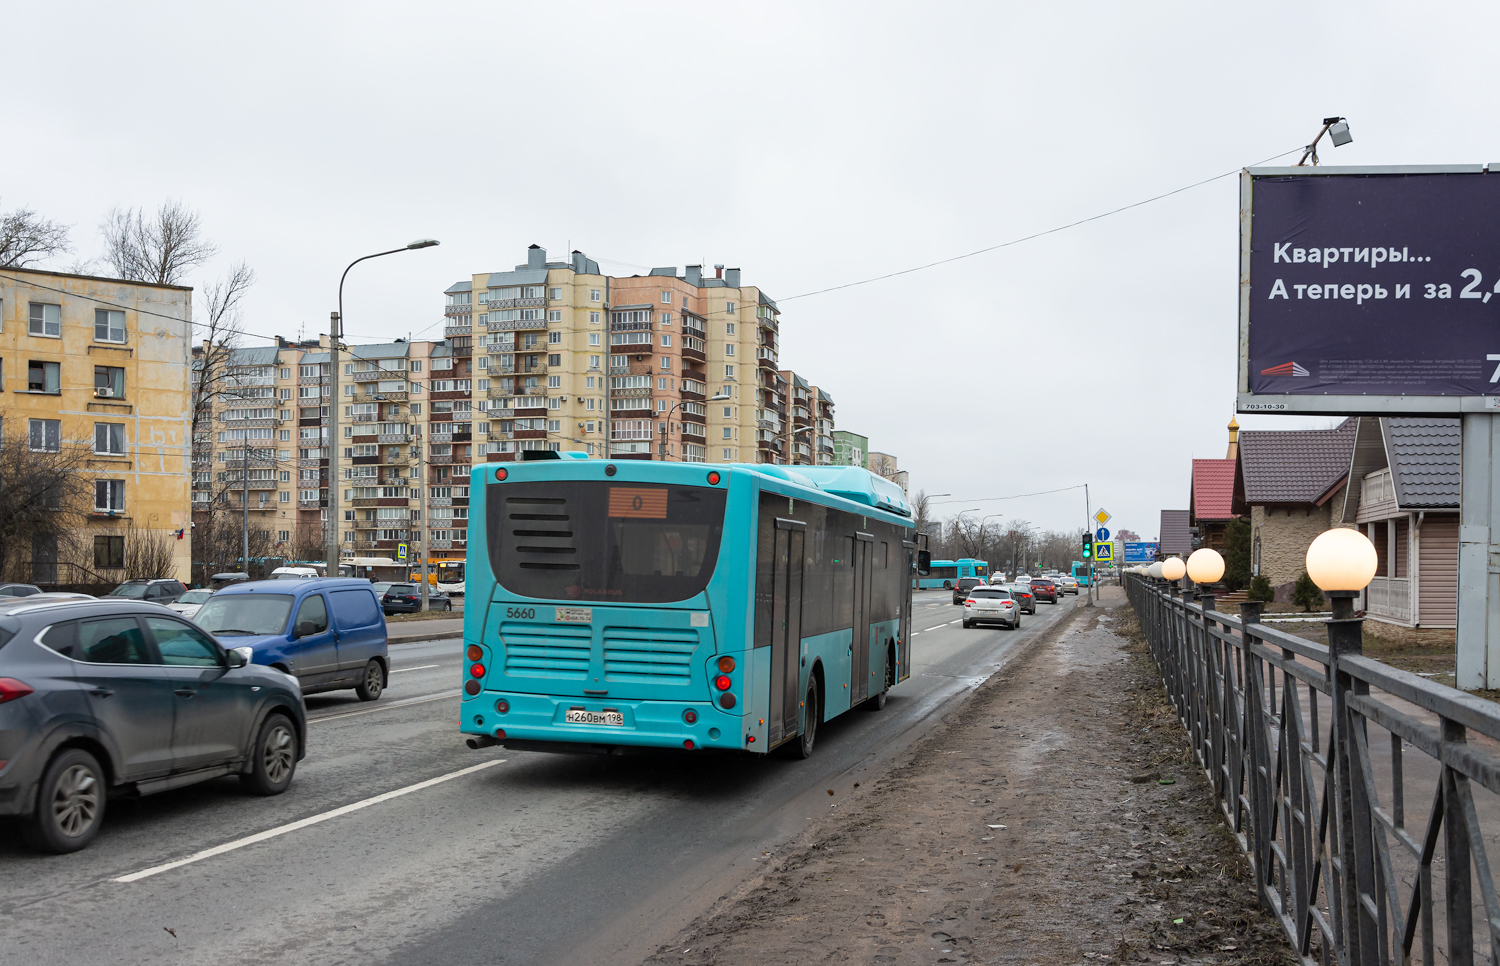 Saint Petersburg, Volgabus-5270.G4 (CNG) # 5660